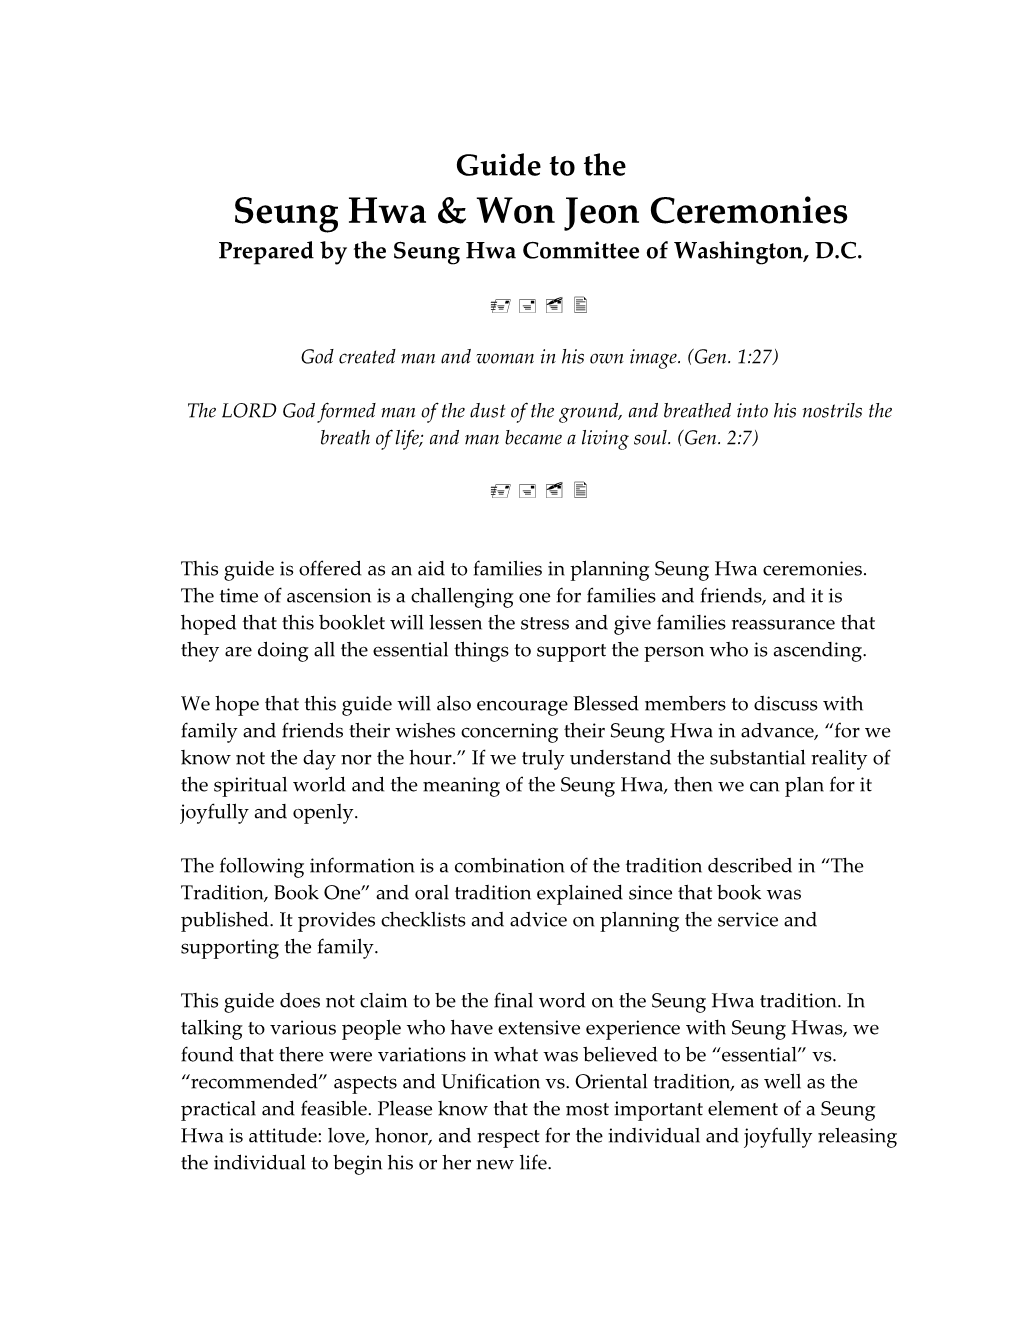 Seung Hwa & Won Jeon Ceremonies